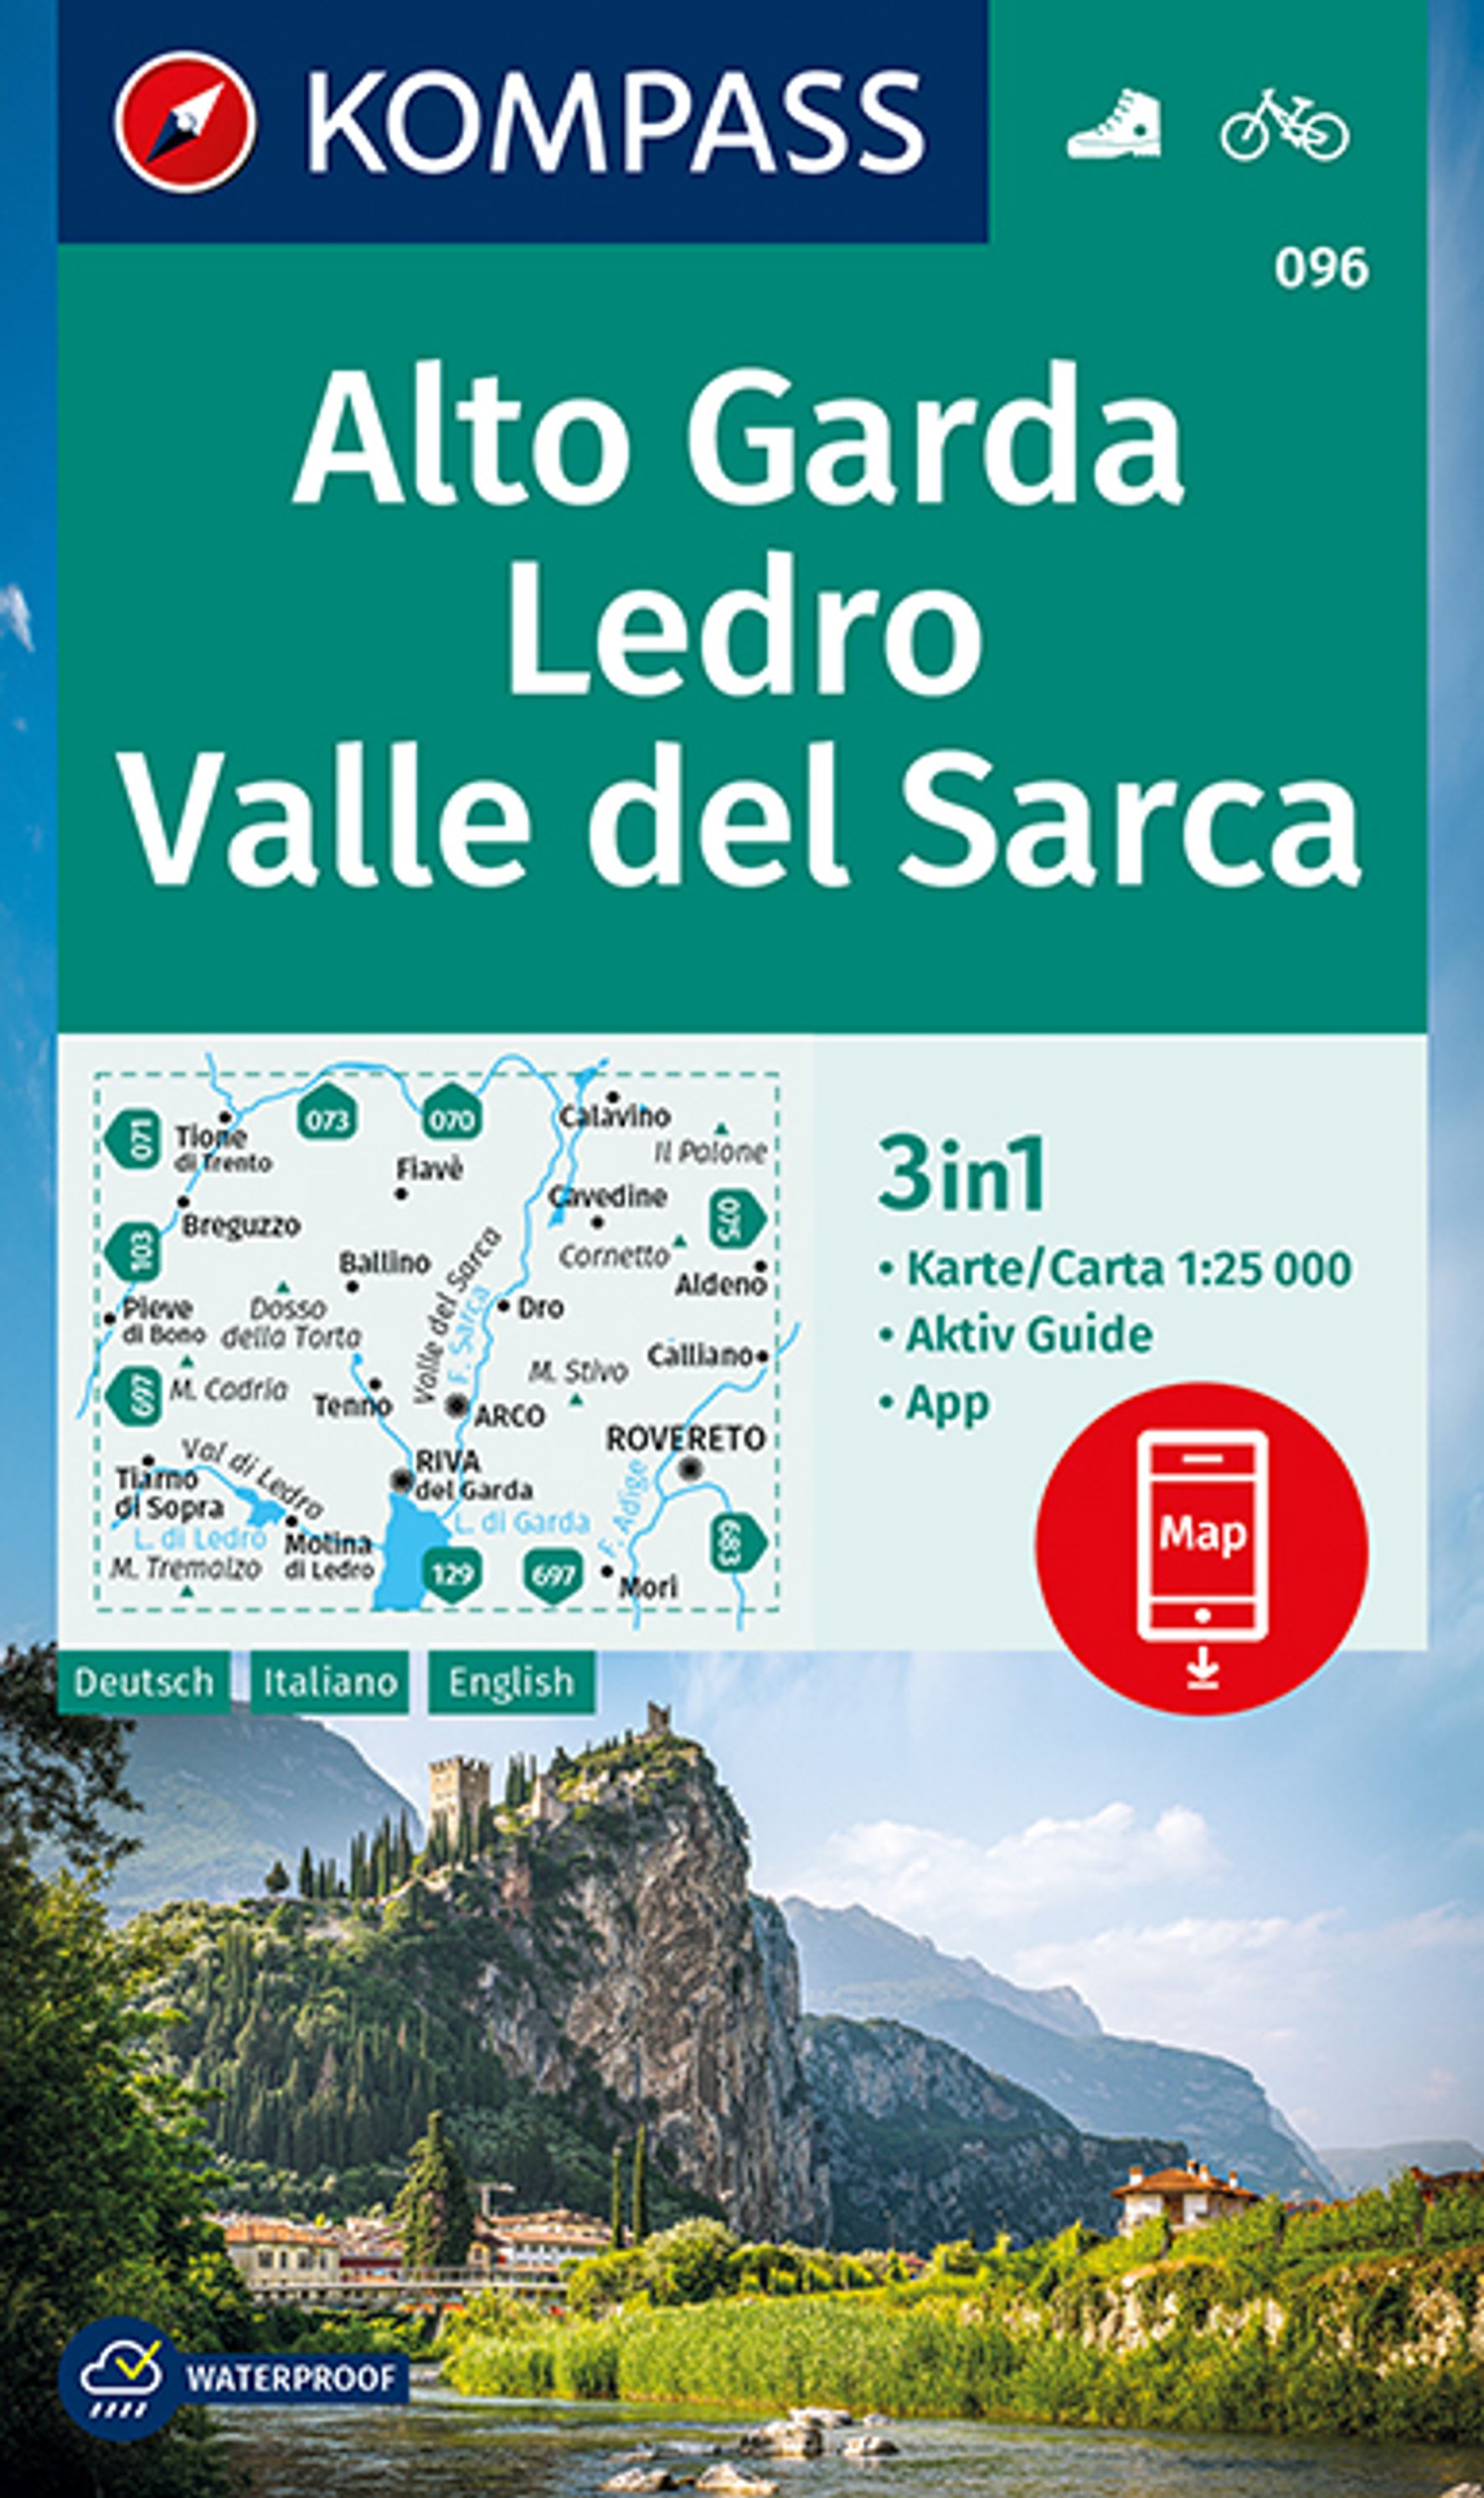 MAIRDUMONT KOMPASS Wanderkarte 096 Alto Garda, Ledro, Valle del Sarca